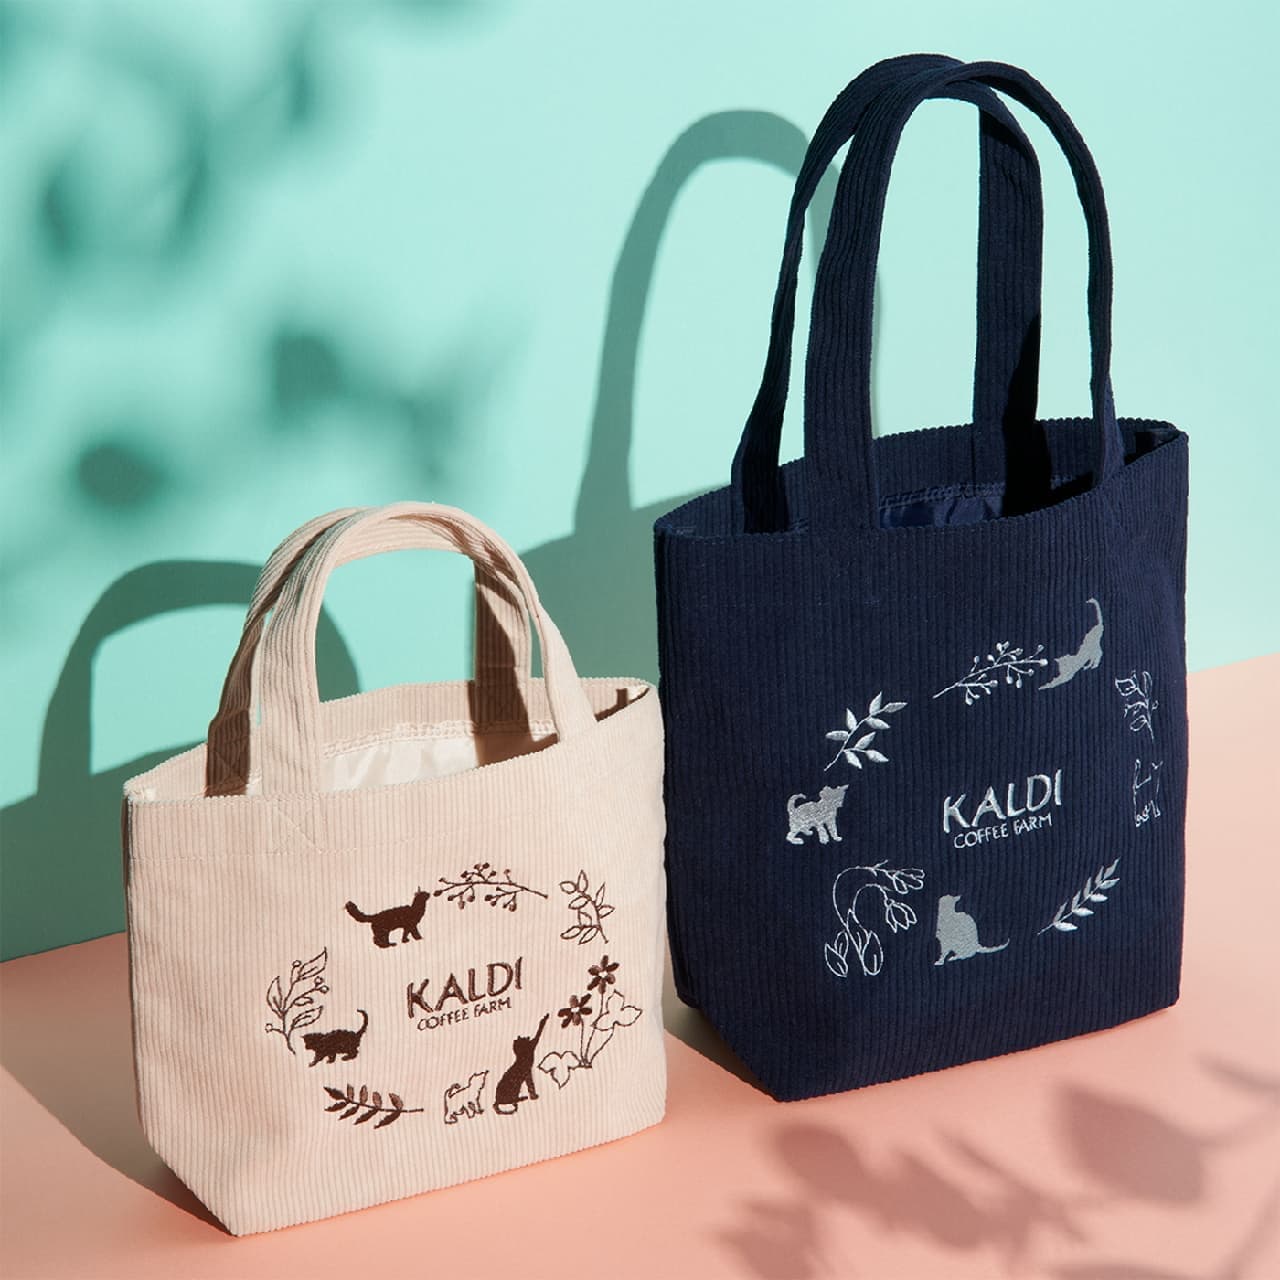 KALDI "Neko no Hi Bag" and "Neko no Hi Bag Premium